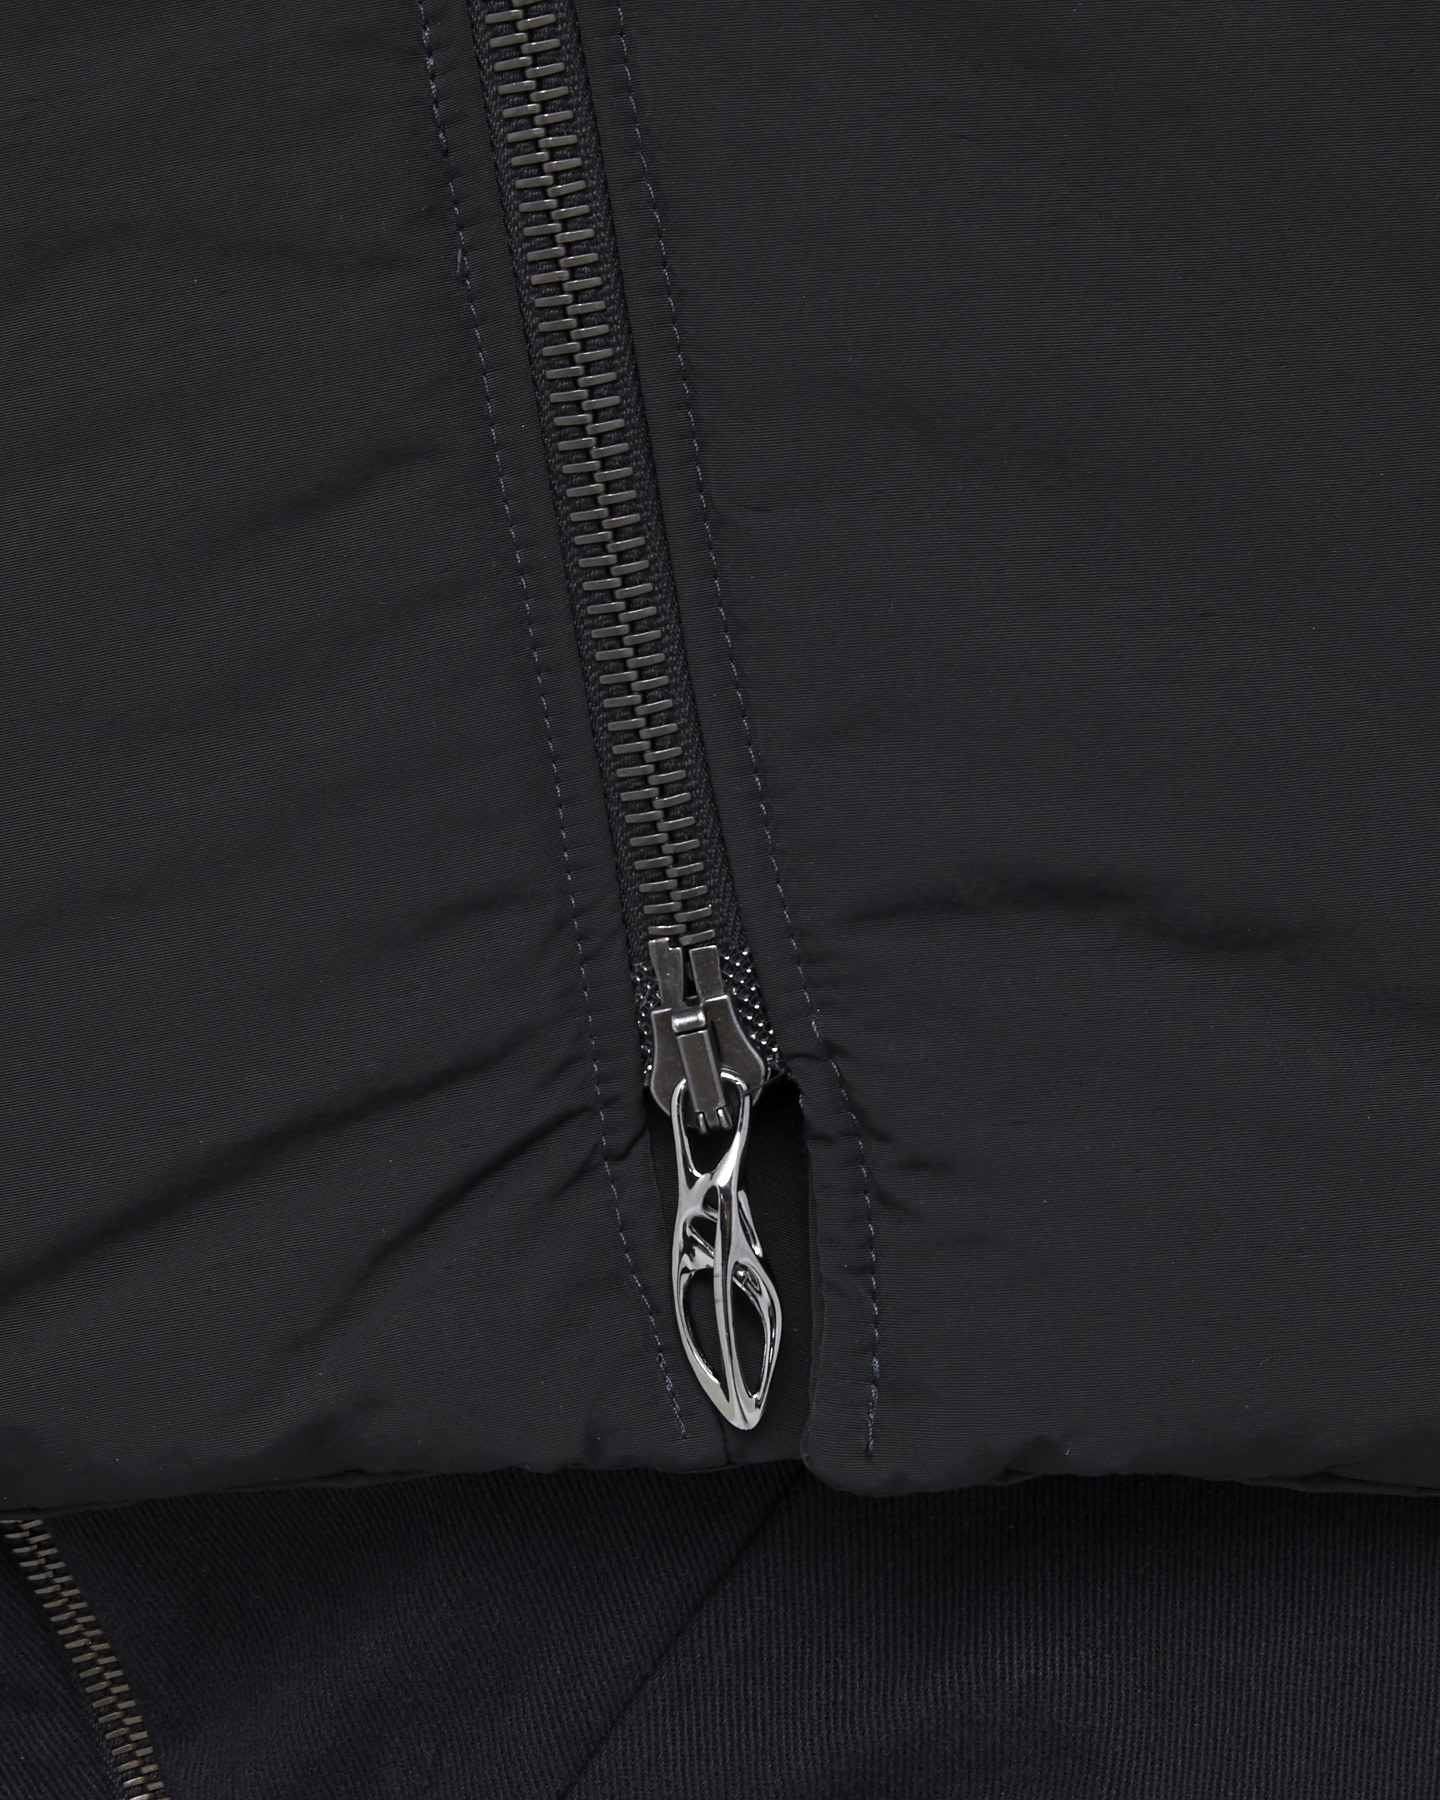 Distortion Hooded Jacket by Leon Emanuel Blanck | Shop Untitled NYC